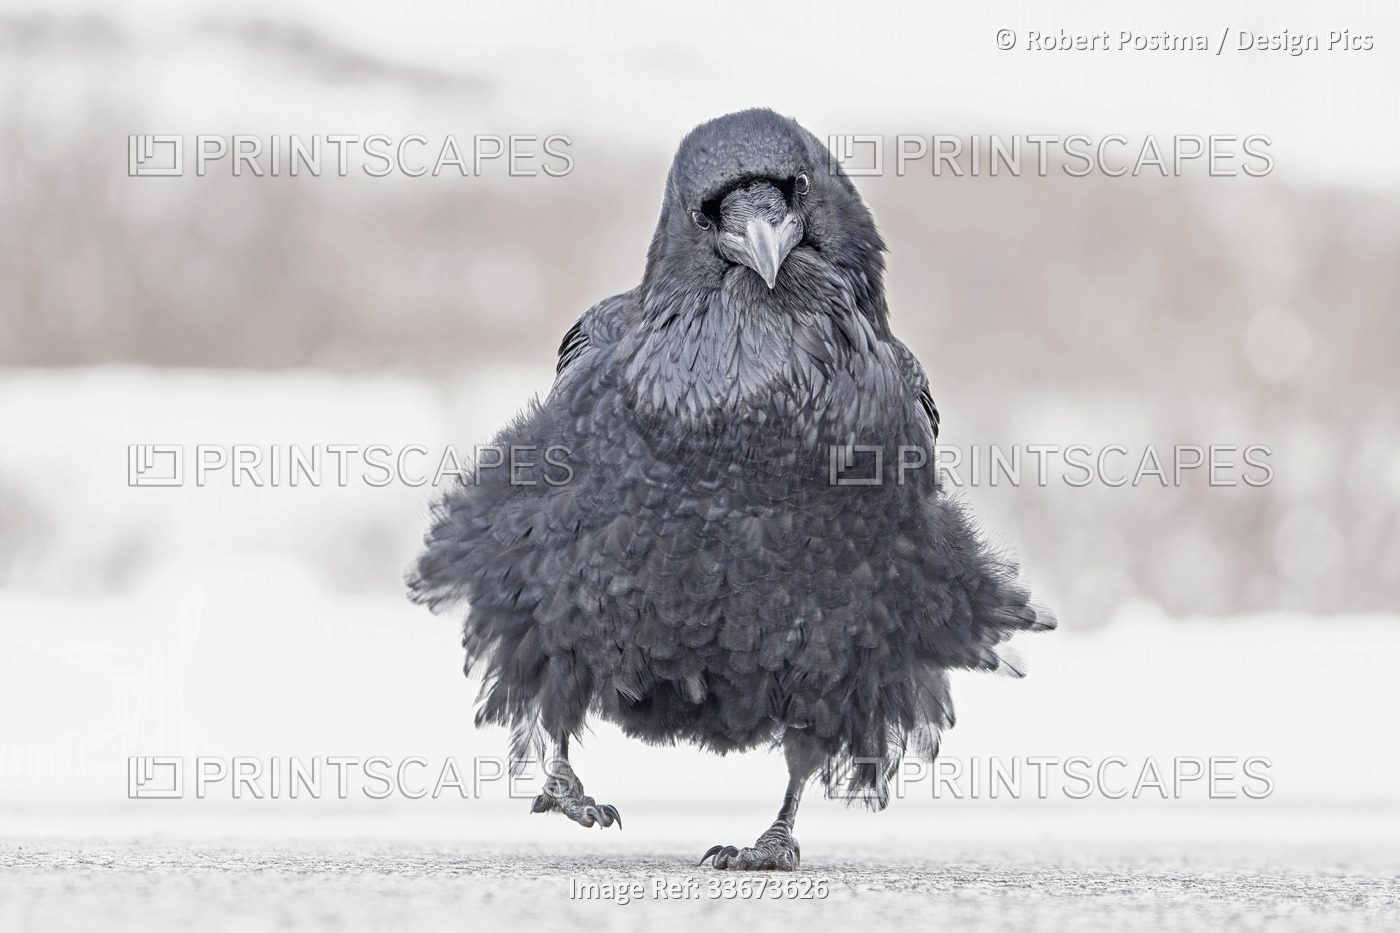 Bird with flouncy plumage waddles towards the camera; Yukon, Canada